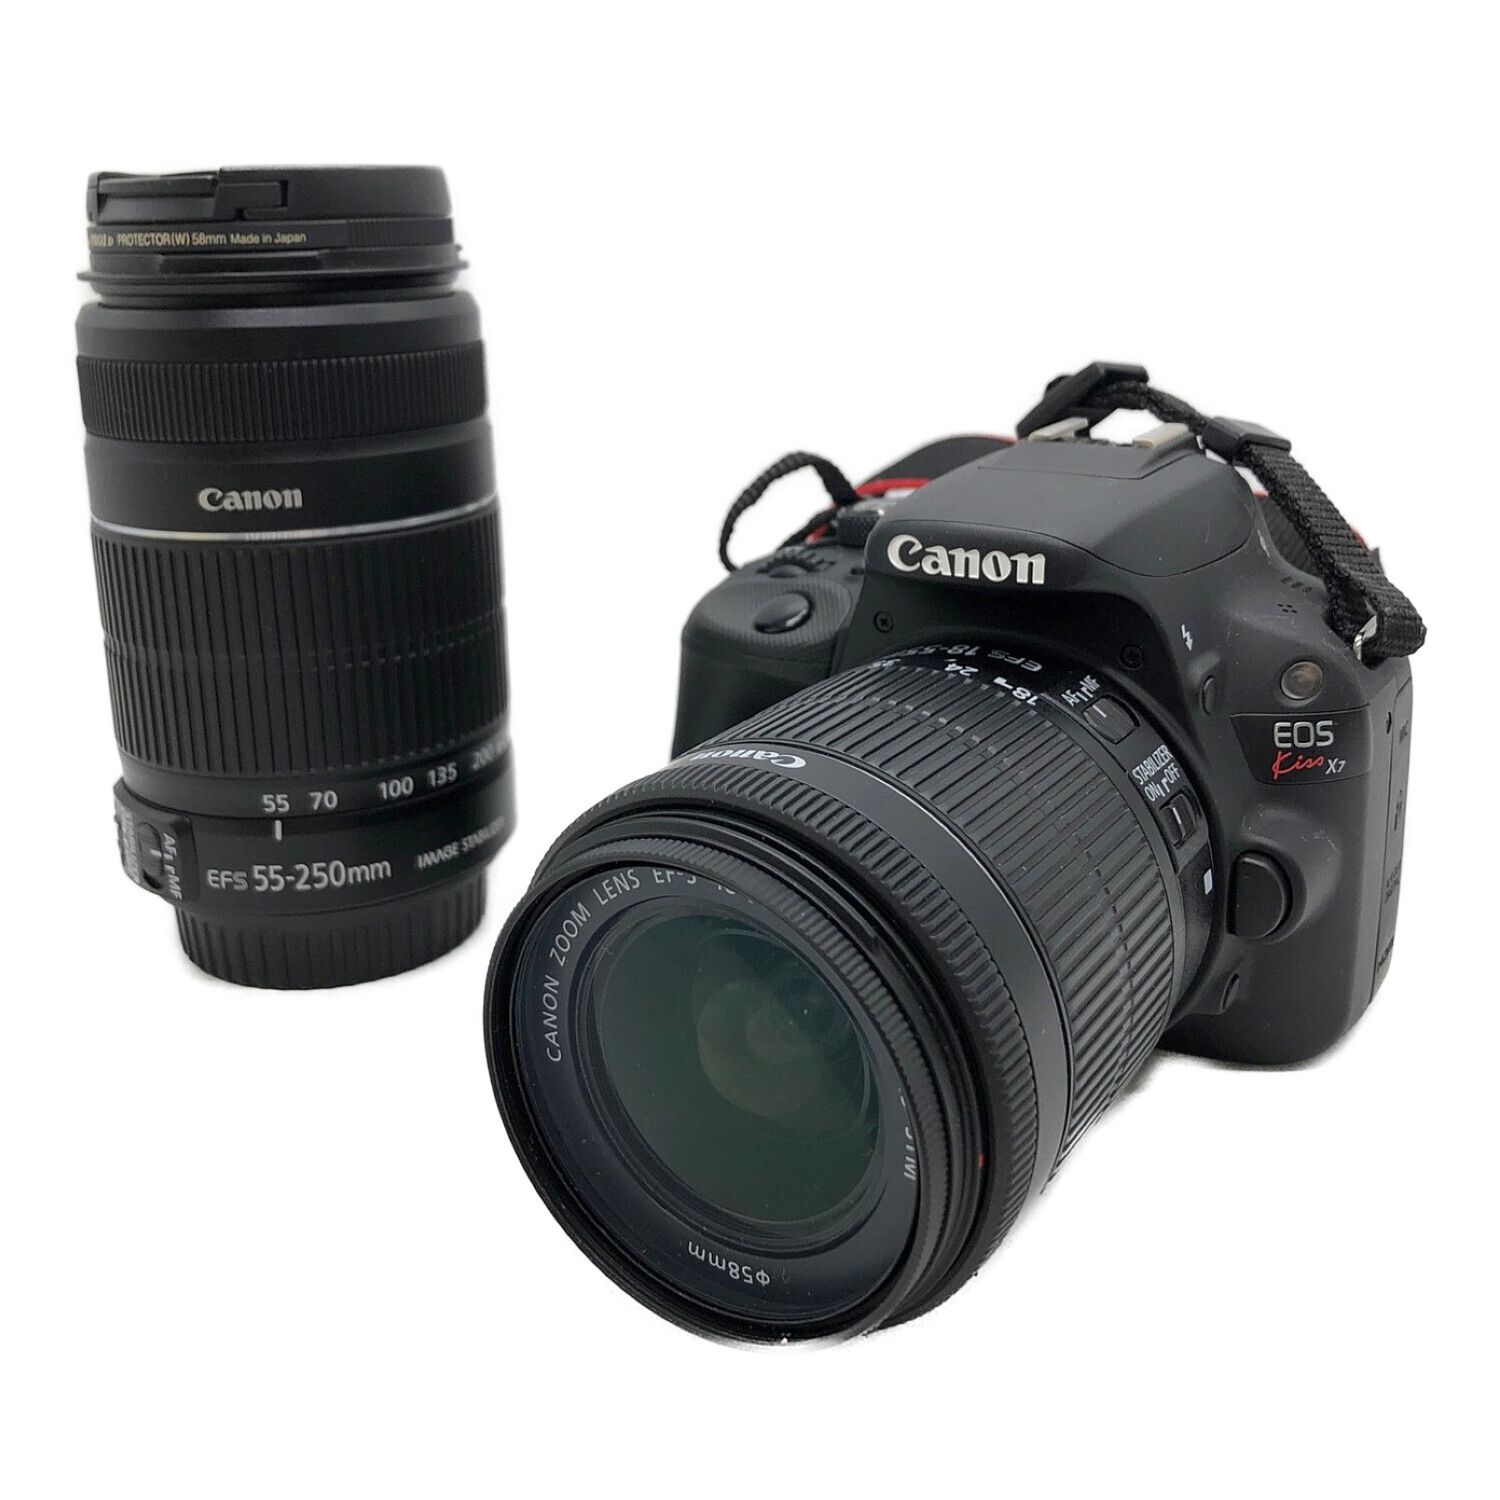 CANON (キャノン) デジタル一眼レフカメラ レンズ:18-55mm/55-250mm ...